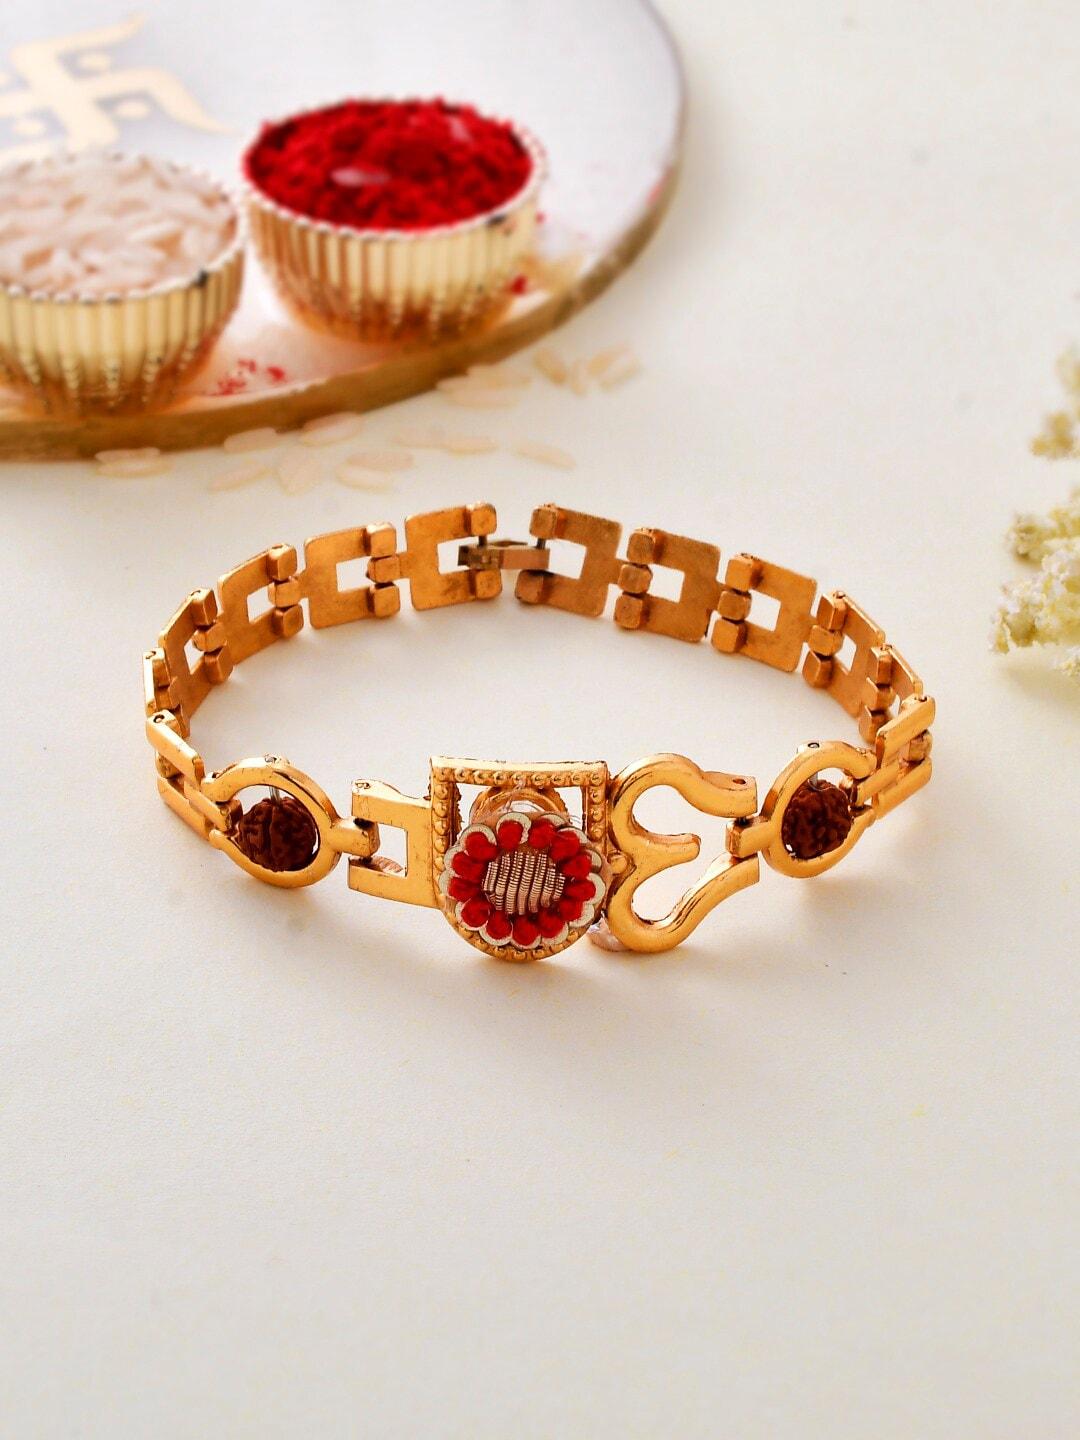 aapno rajasthan beads woven bracelet charm rakhi